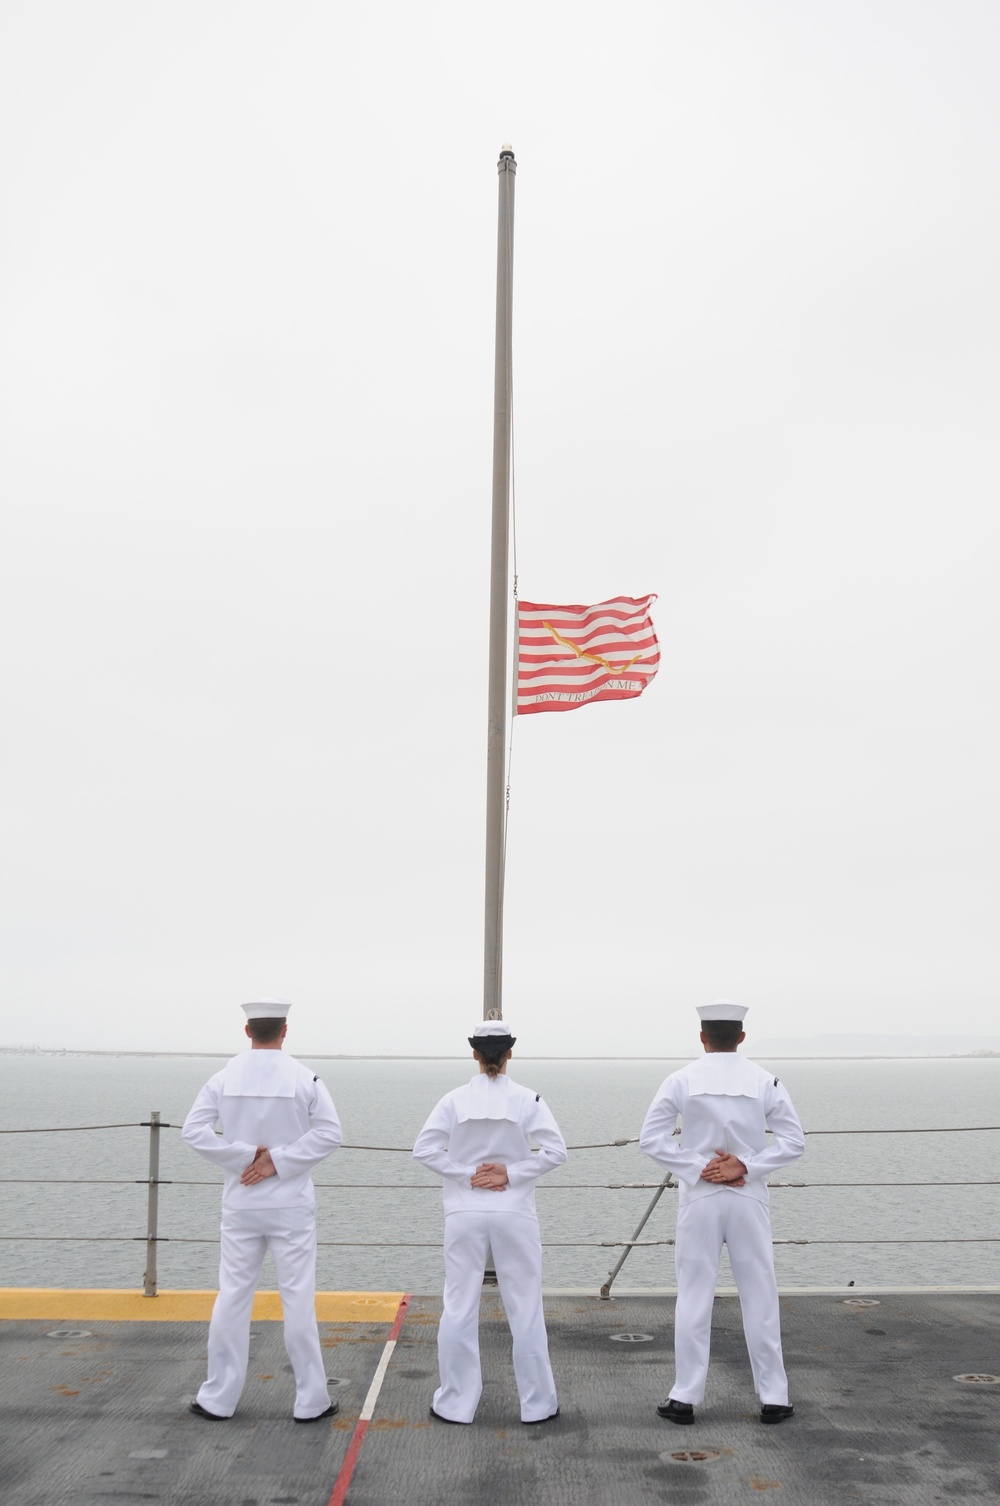 USS Essex sailors remember Sept. 11